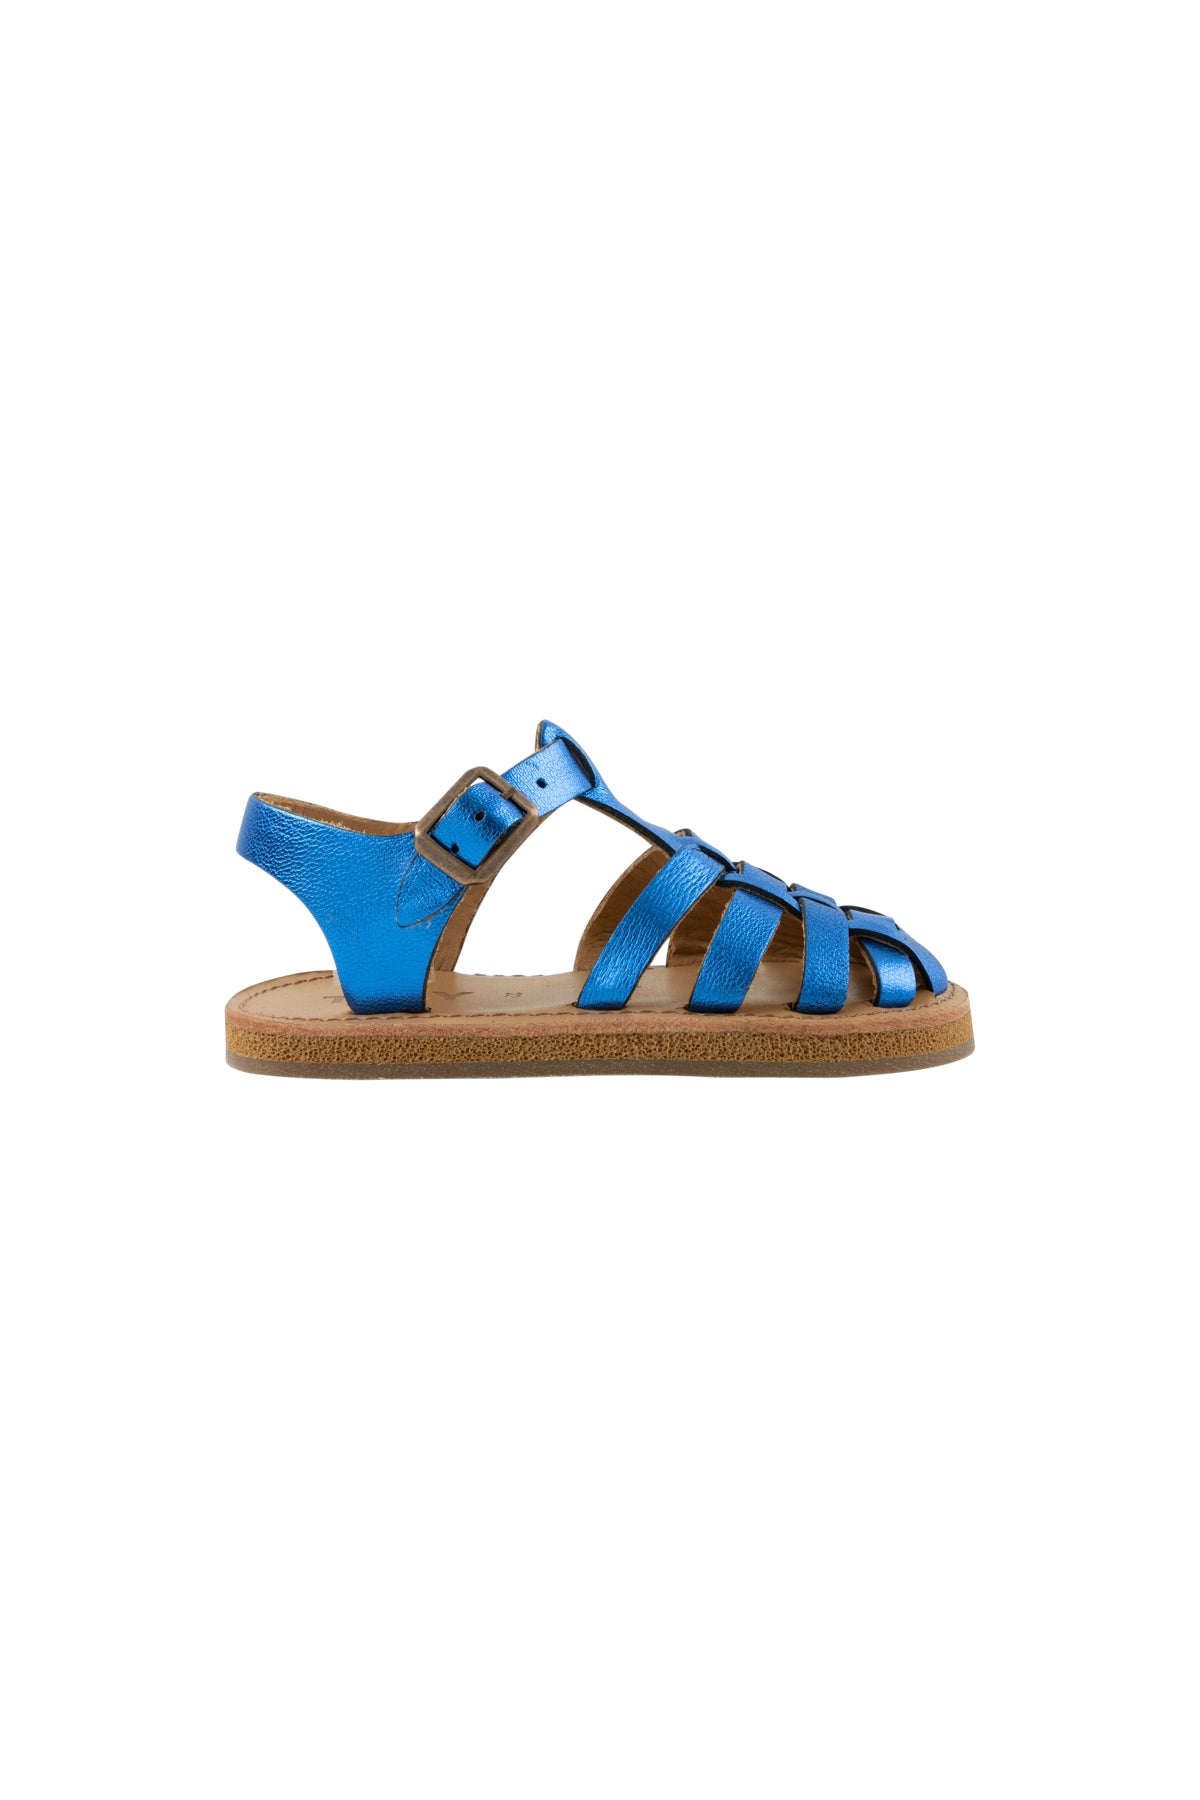 Tiny Cottons Metallic Braided Sandals - Lapis Blue